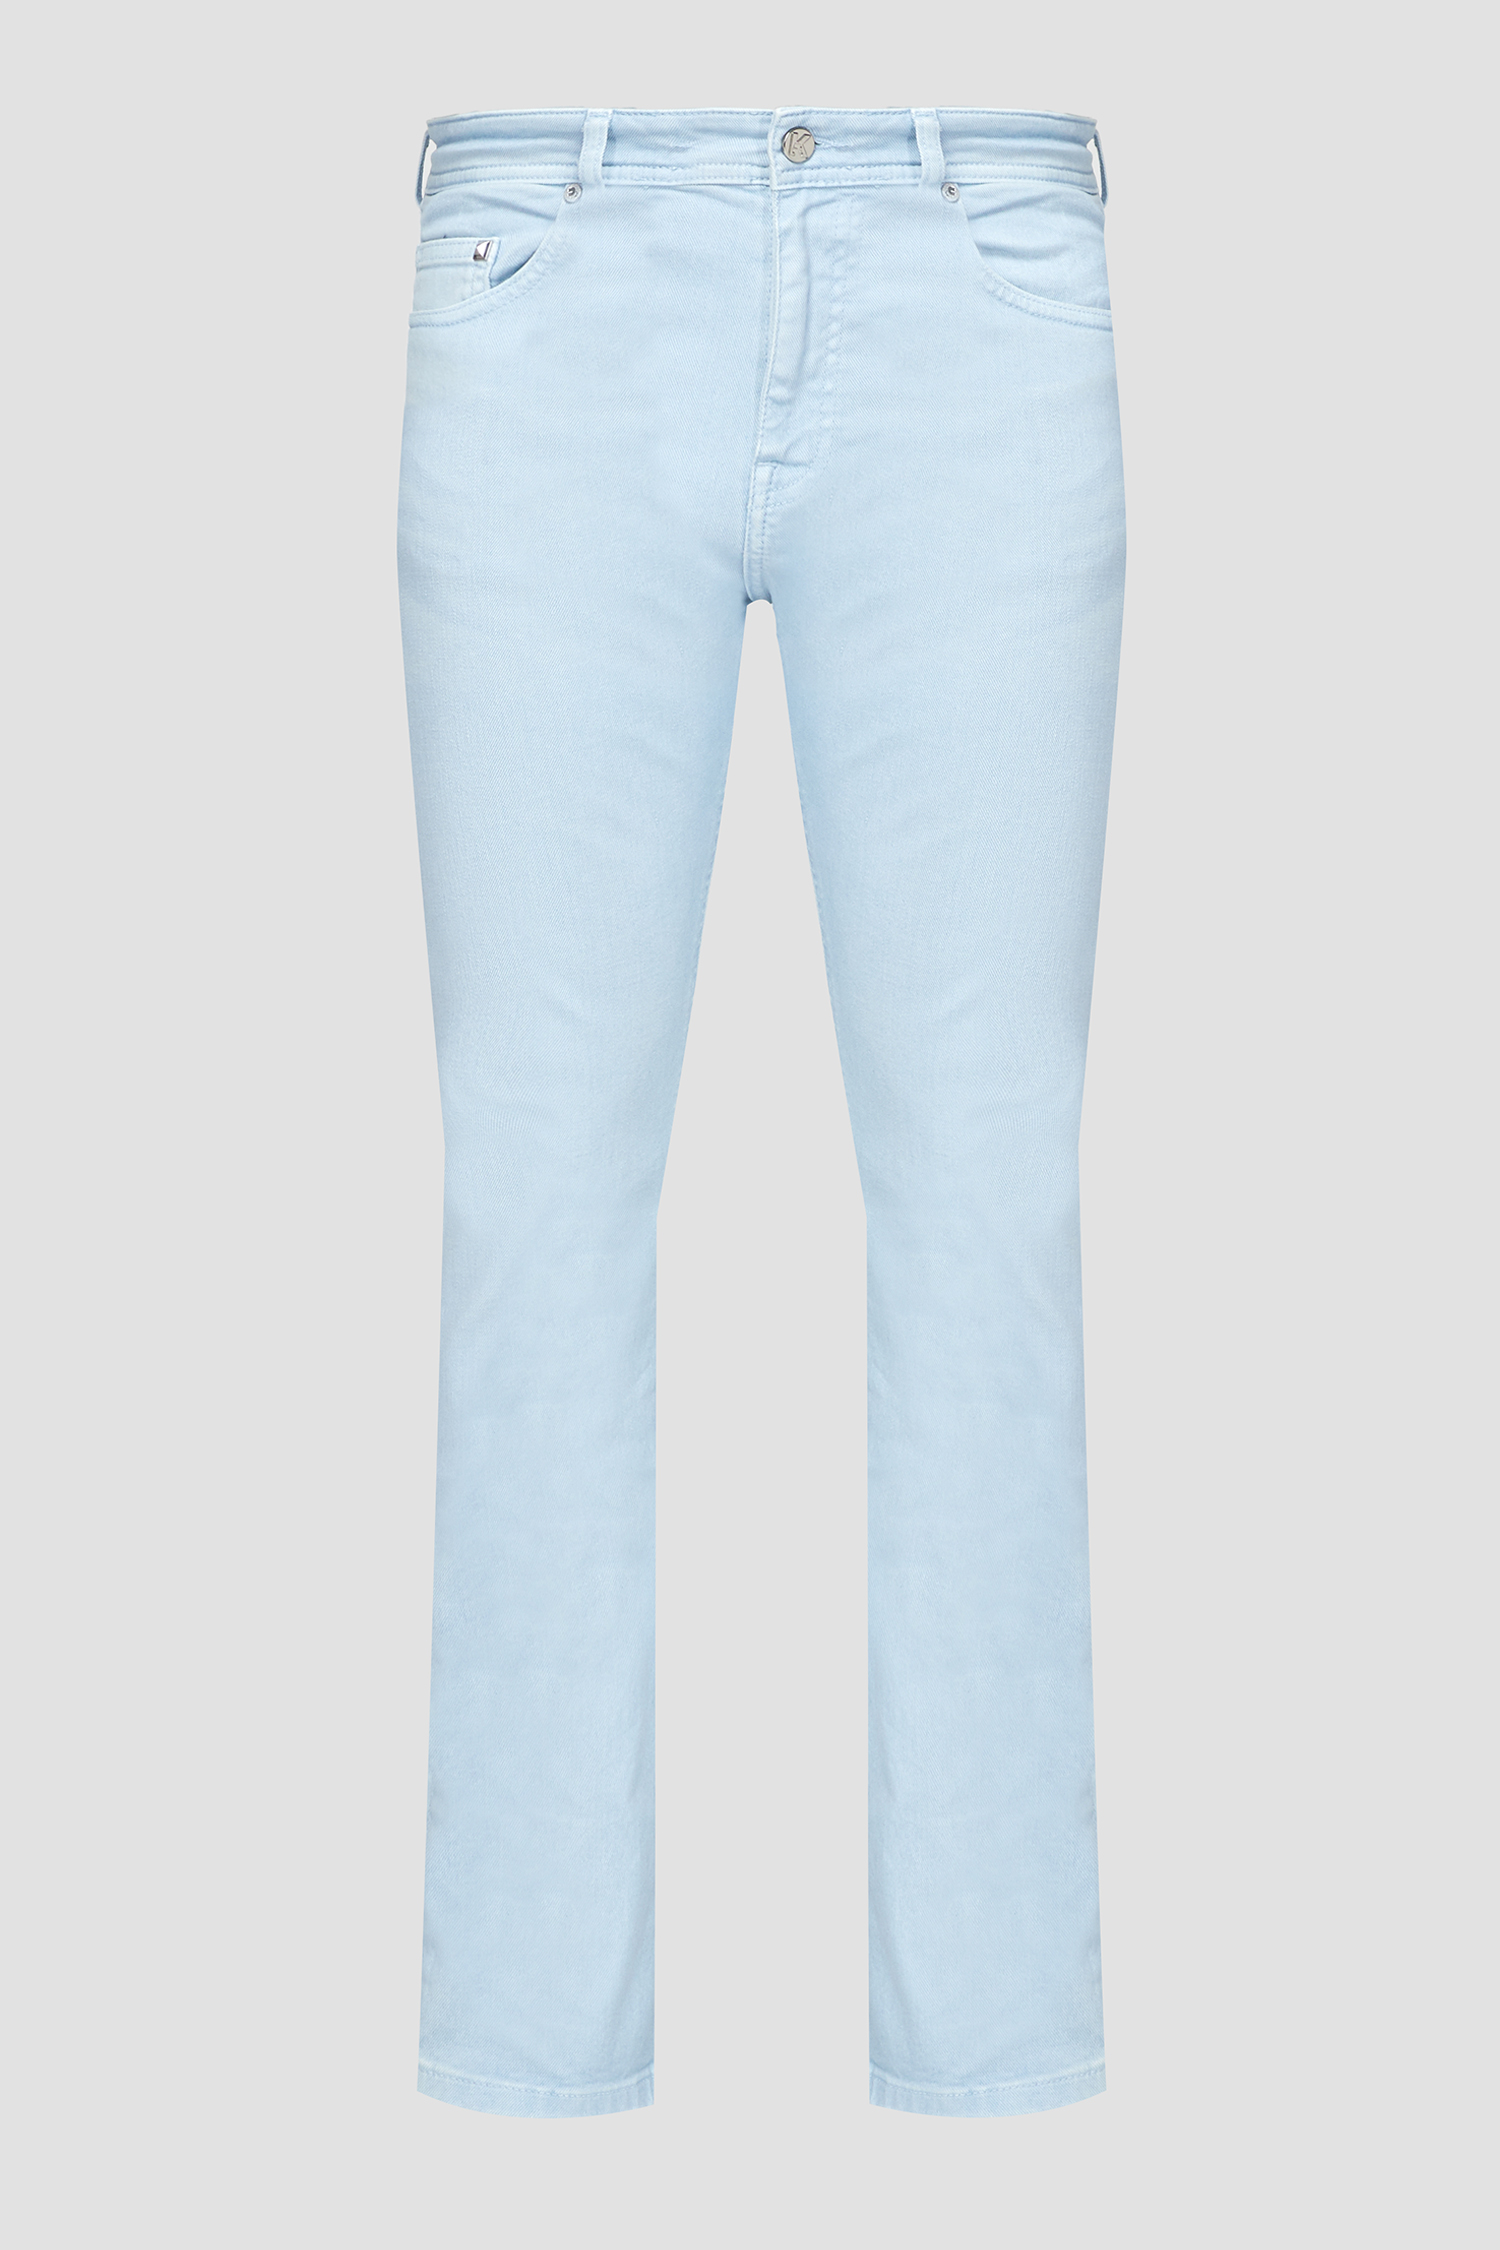 Мужские голубые джинсы Karl Lagerfeld 532837.265840;600